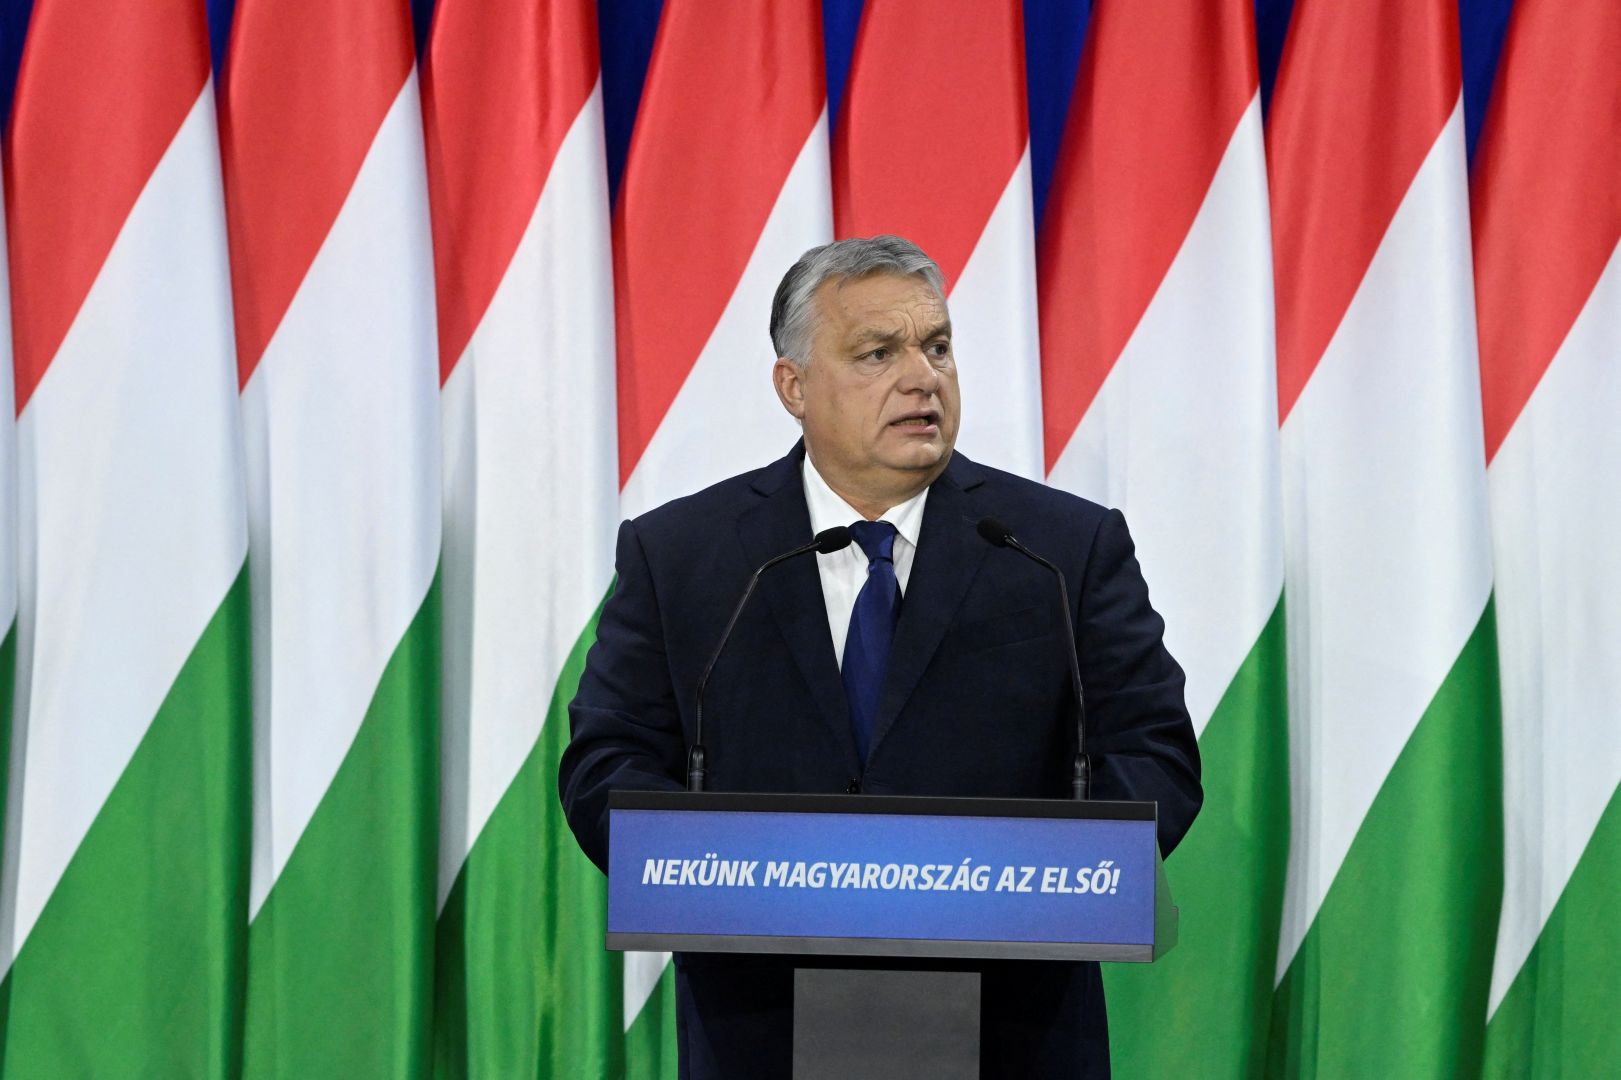 Hungary can soon ratify Sweden's NATO bid